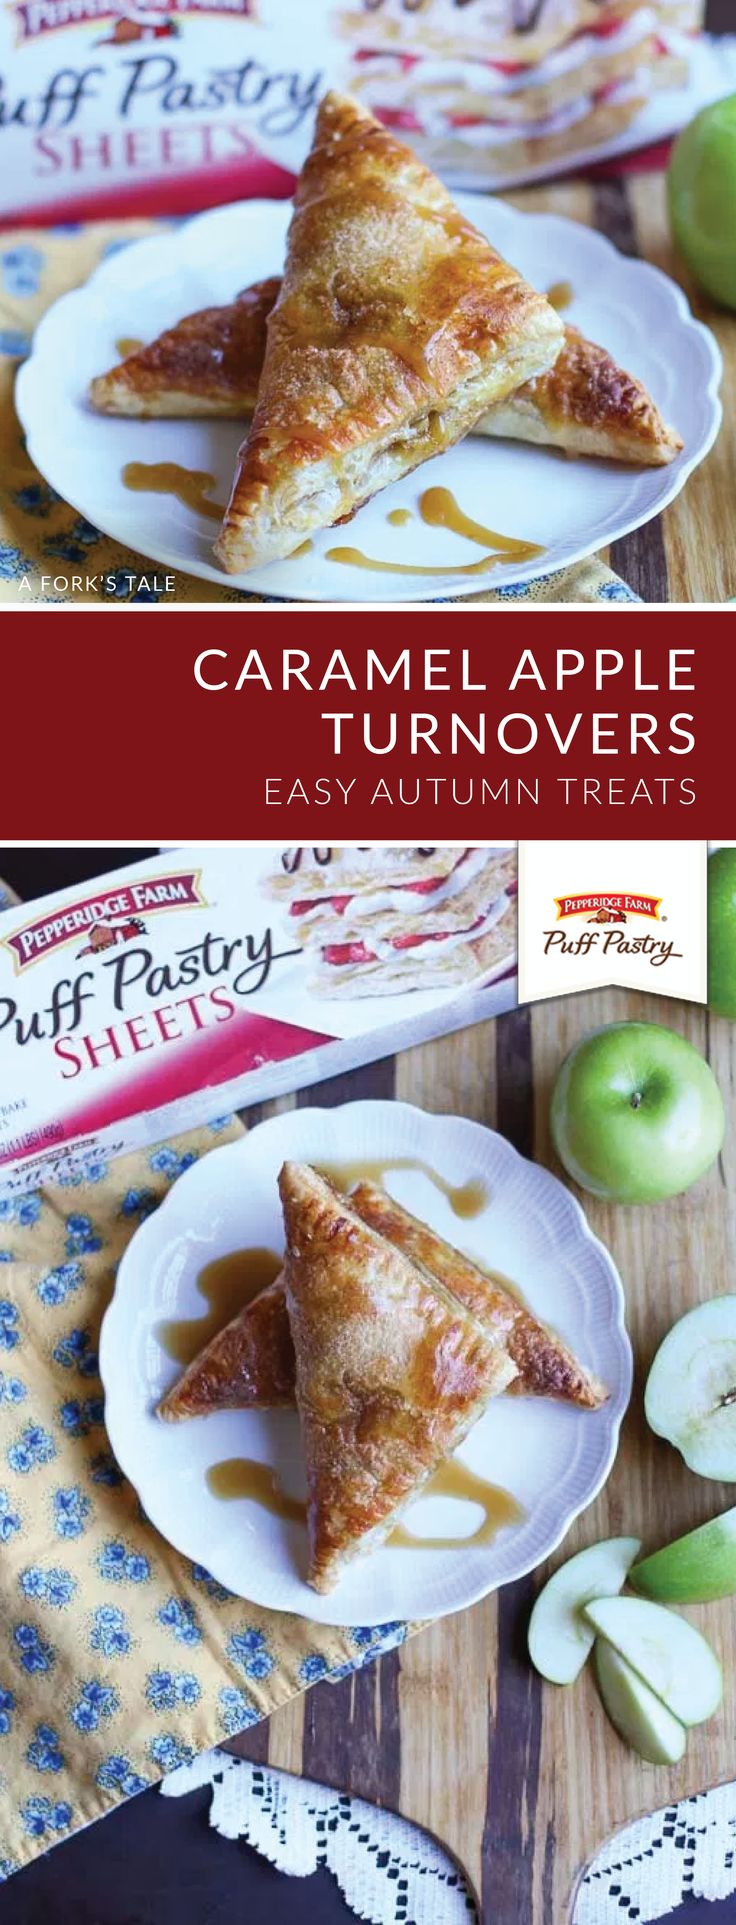 pepperidge farm apple turnover baking instructions